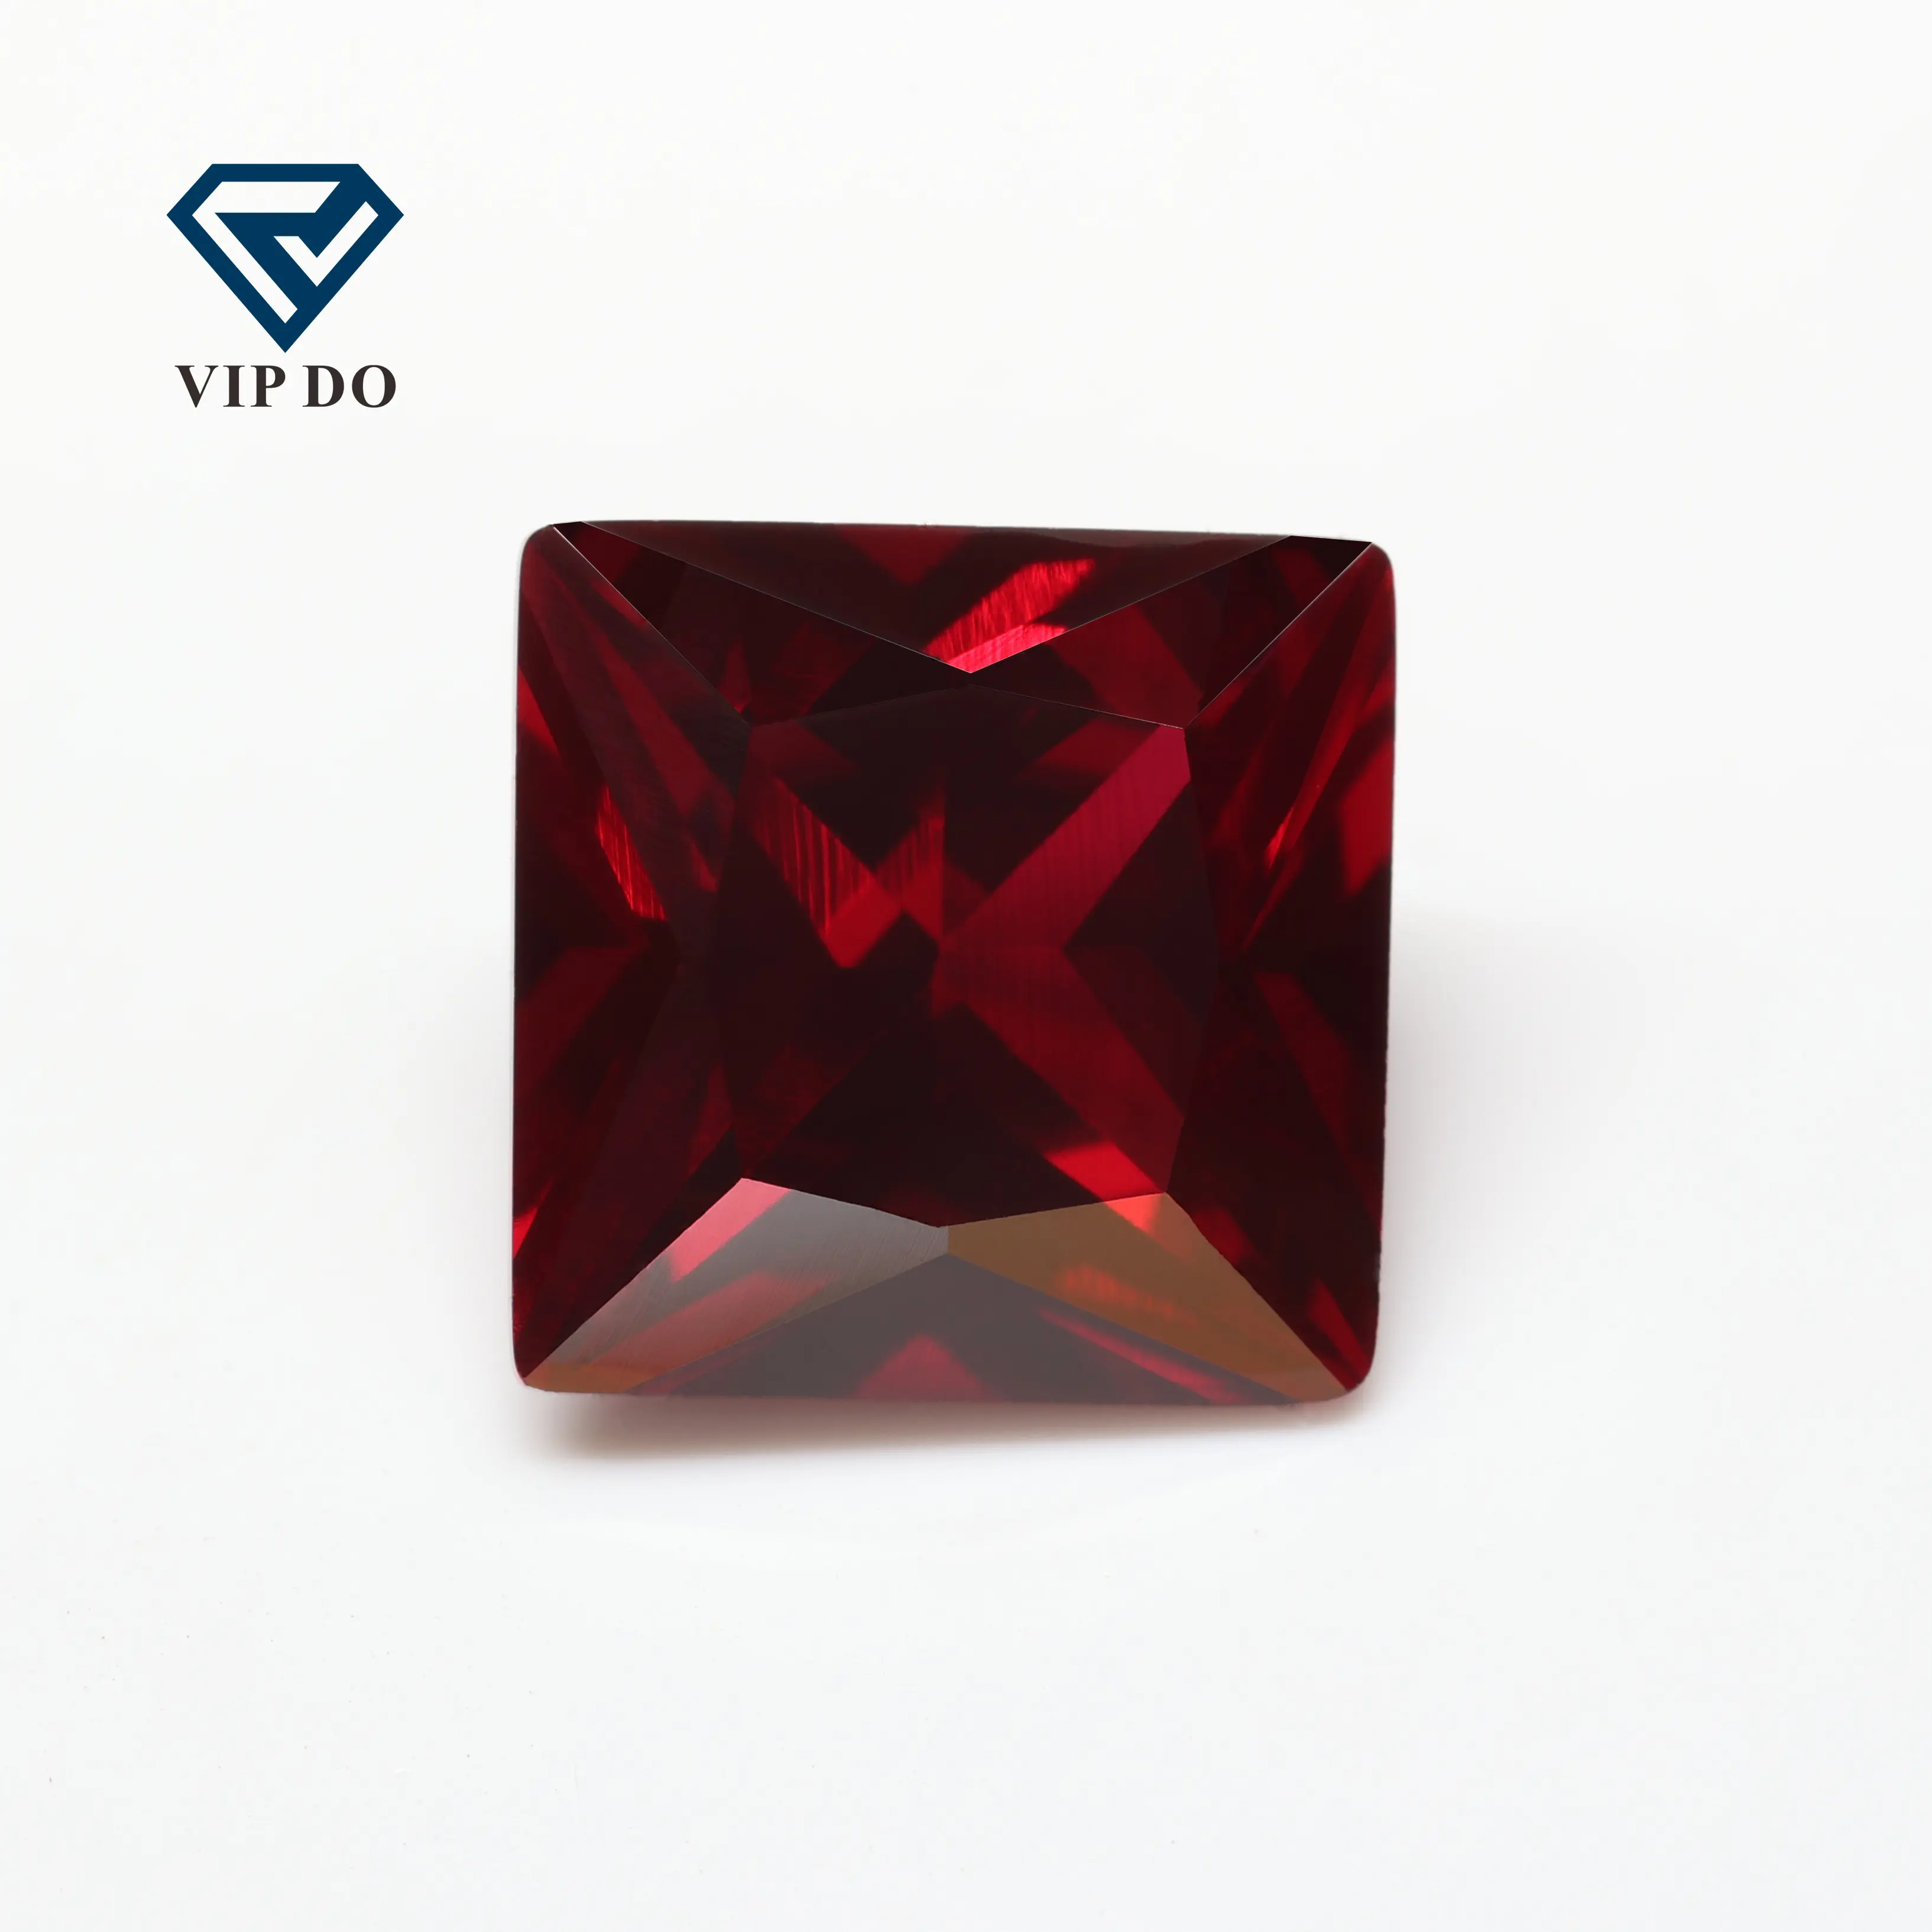 Manufacturers synthetic corundum gemstones Square cut 2*2mm-8*8 mm 8# dark red loose corundum stone ruby for jewelry making